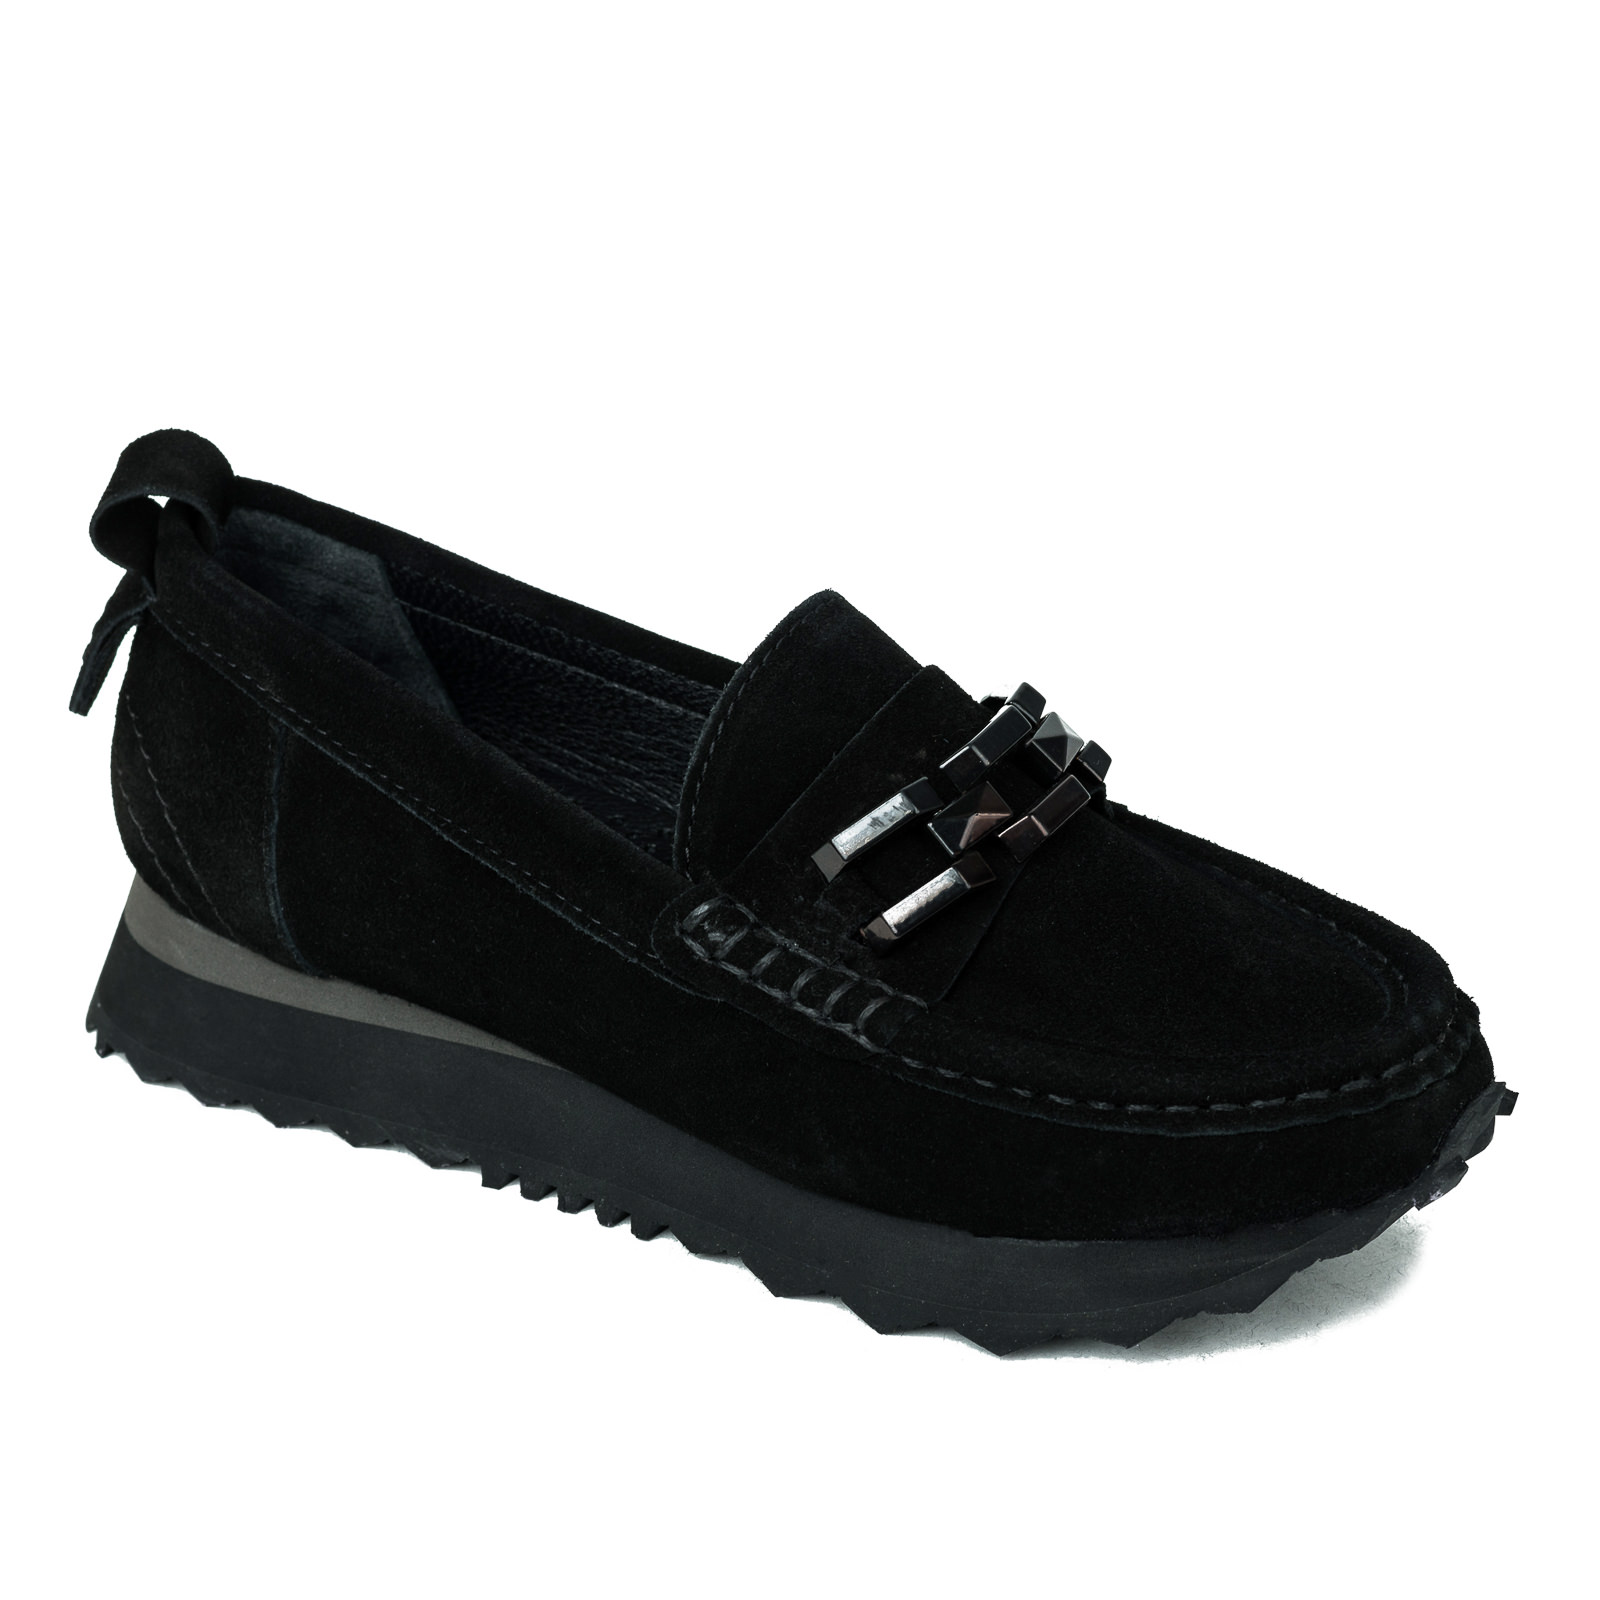 Leather shoes & flats B186 - BLACK